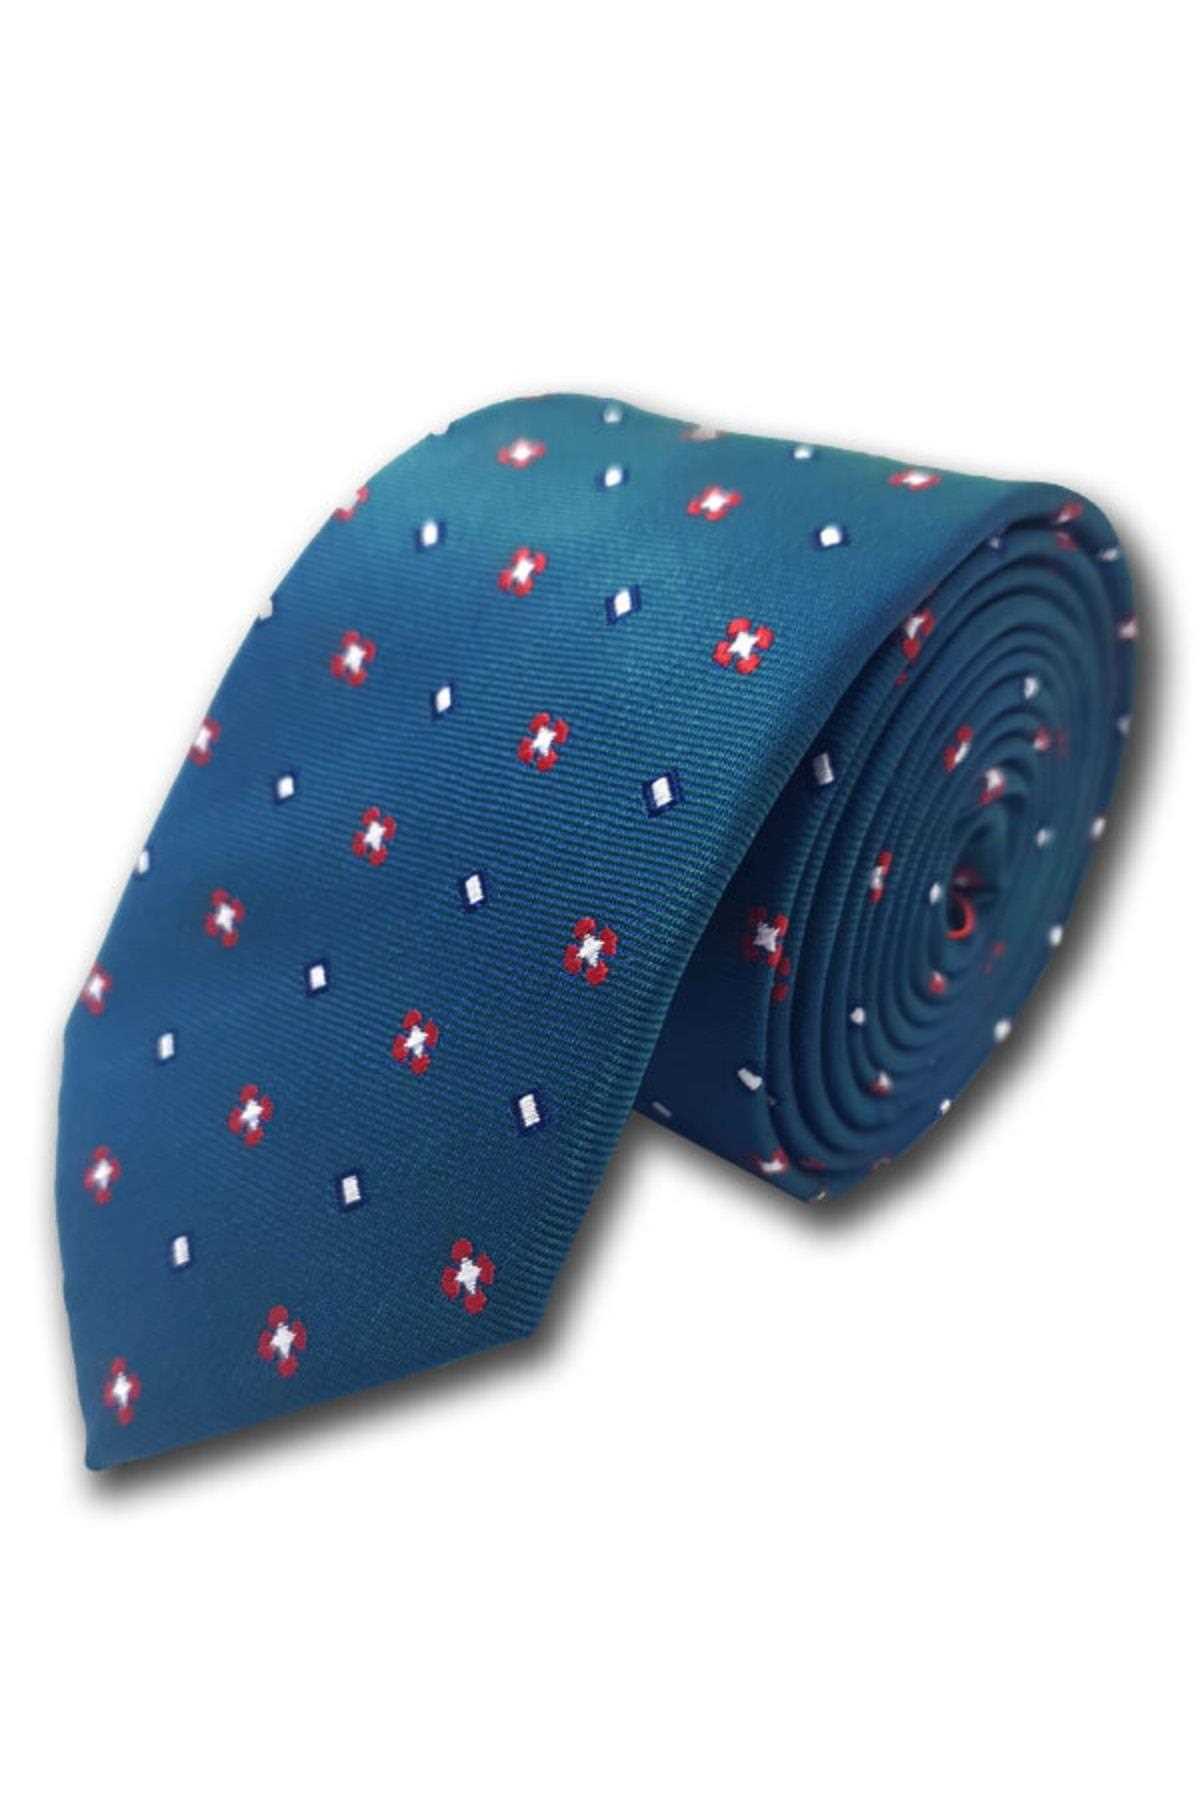 خرید پستی کراوات اورجینال زیبا Parveen رنگ سبز کد ty283174690